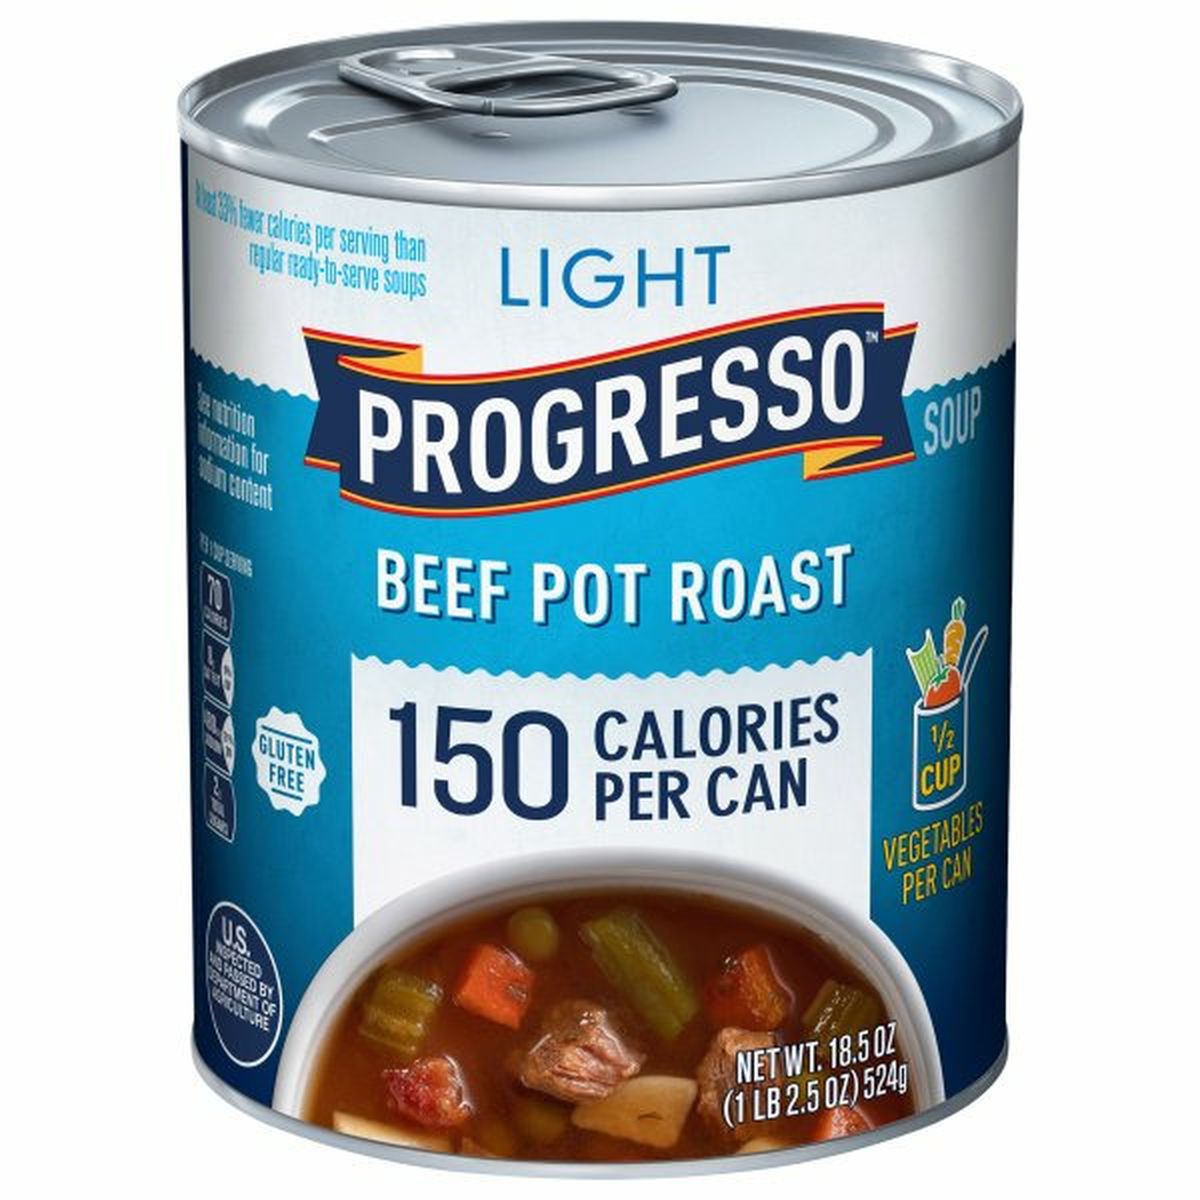 Calories in Progresso Soup, Light, Beef Pot Roast